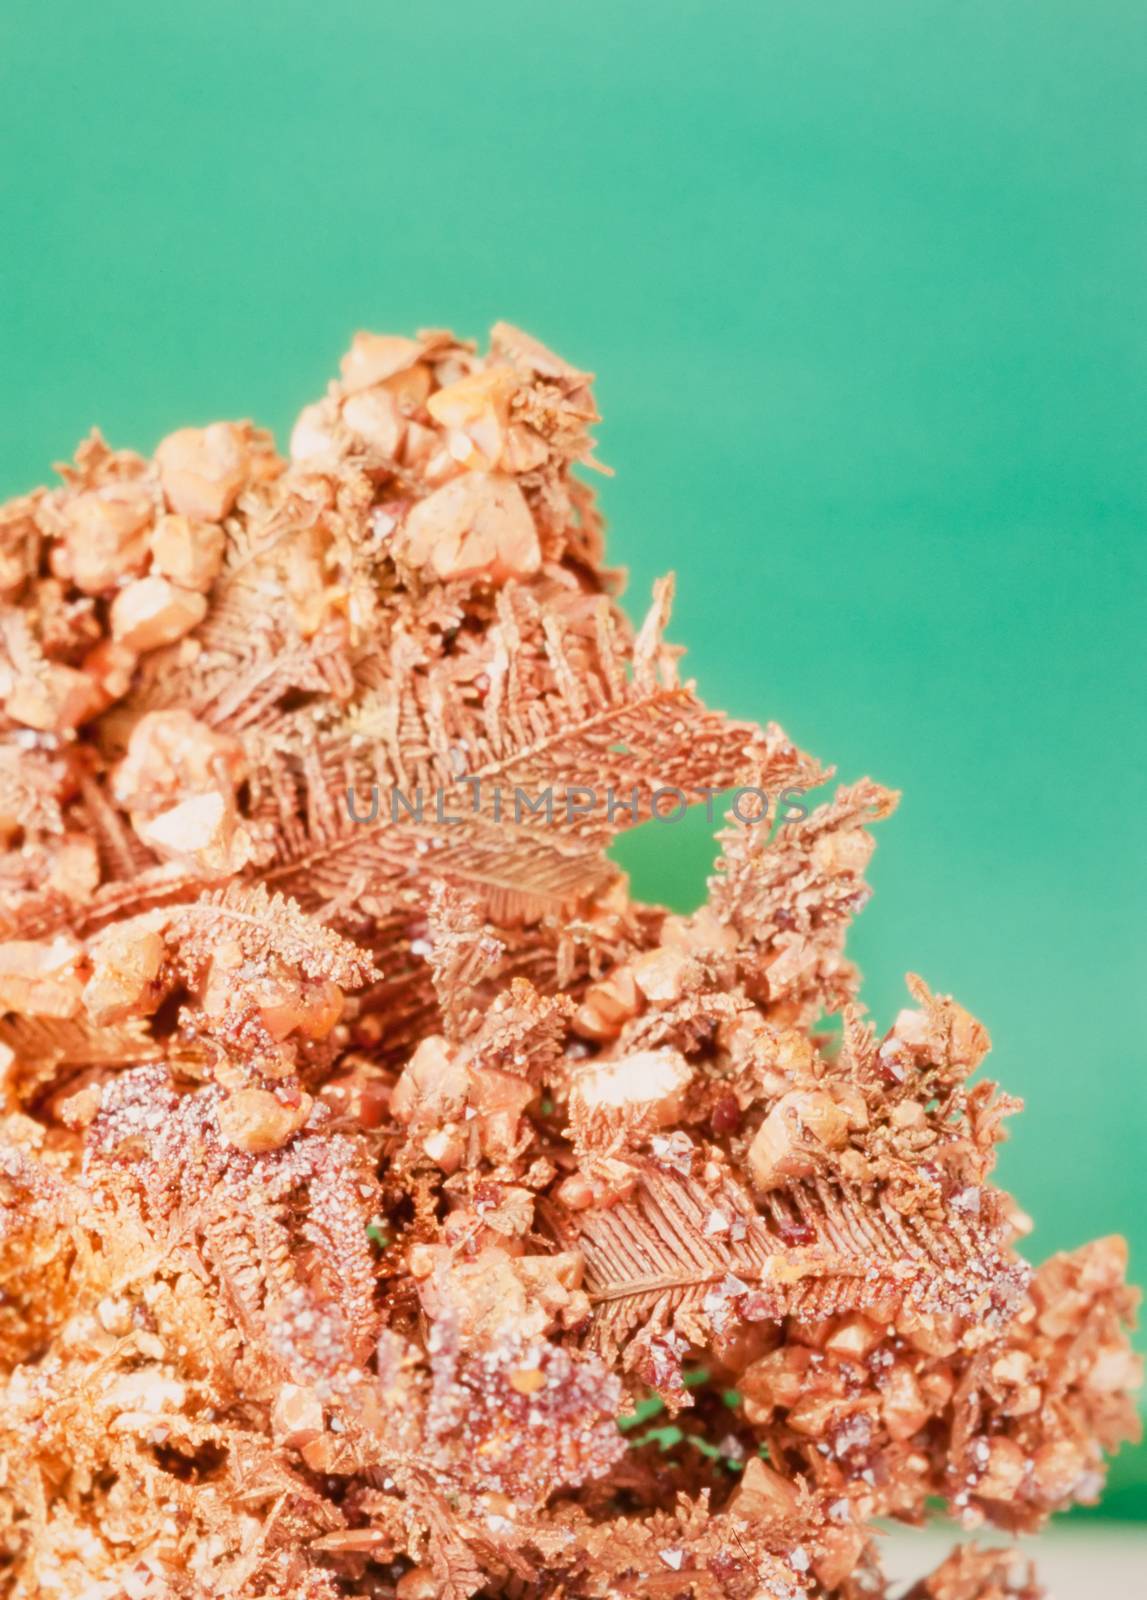 Barrel copper metallic crystals mineral rock by PiLens